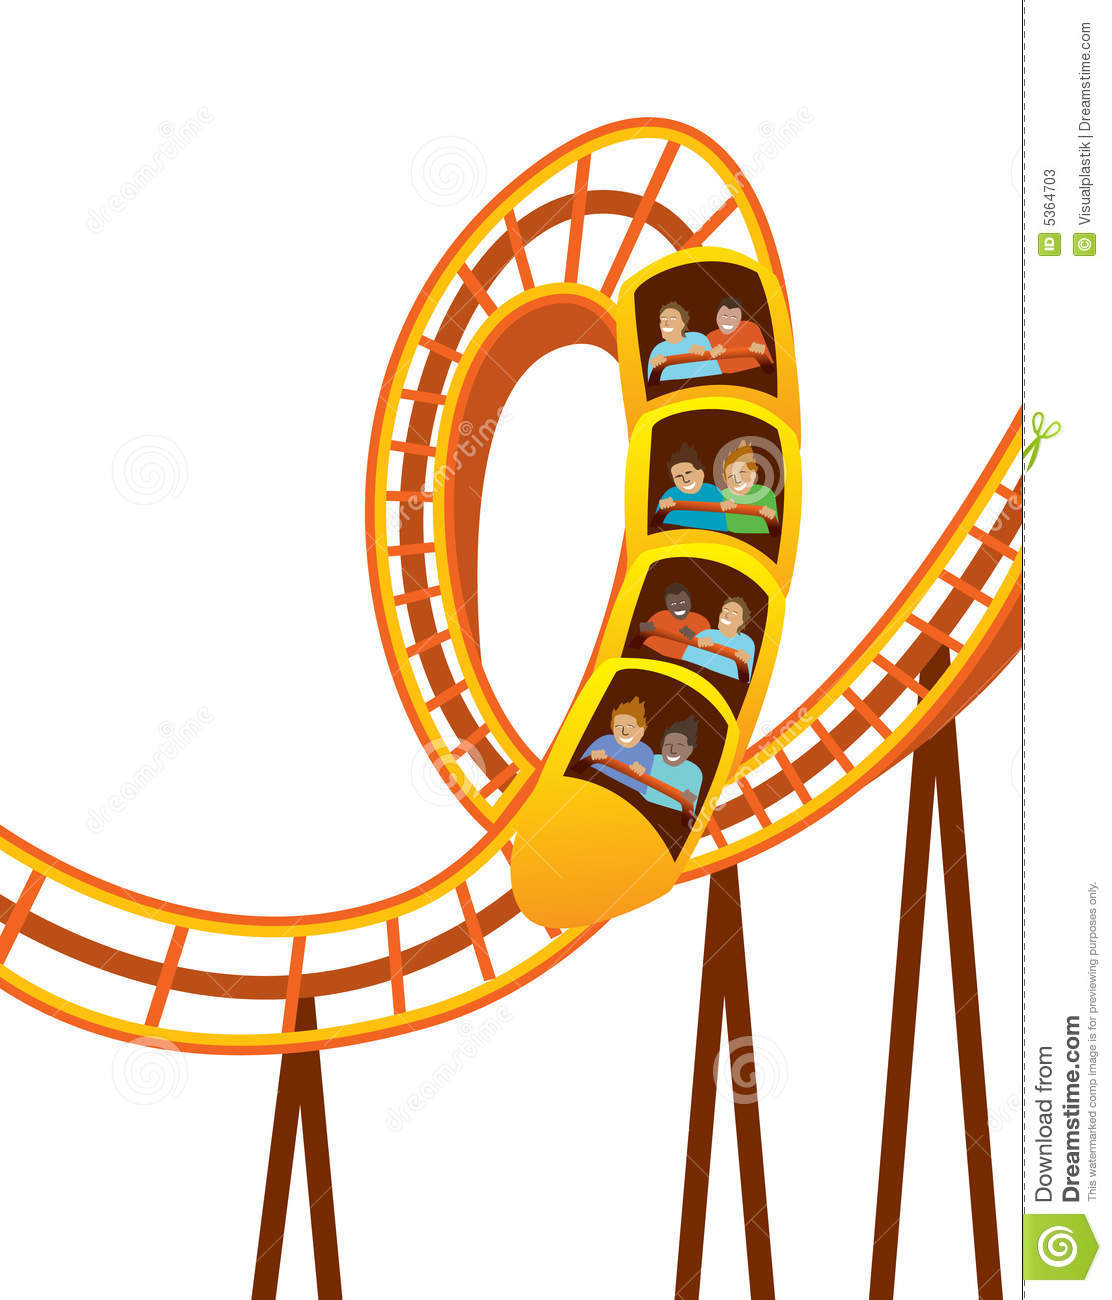 Roller coaster clipart 3